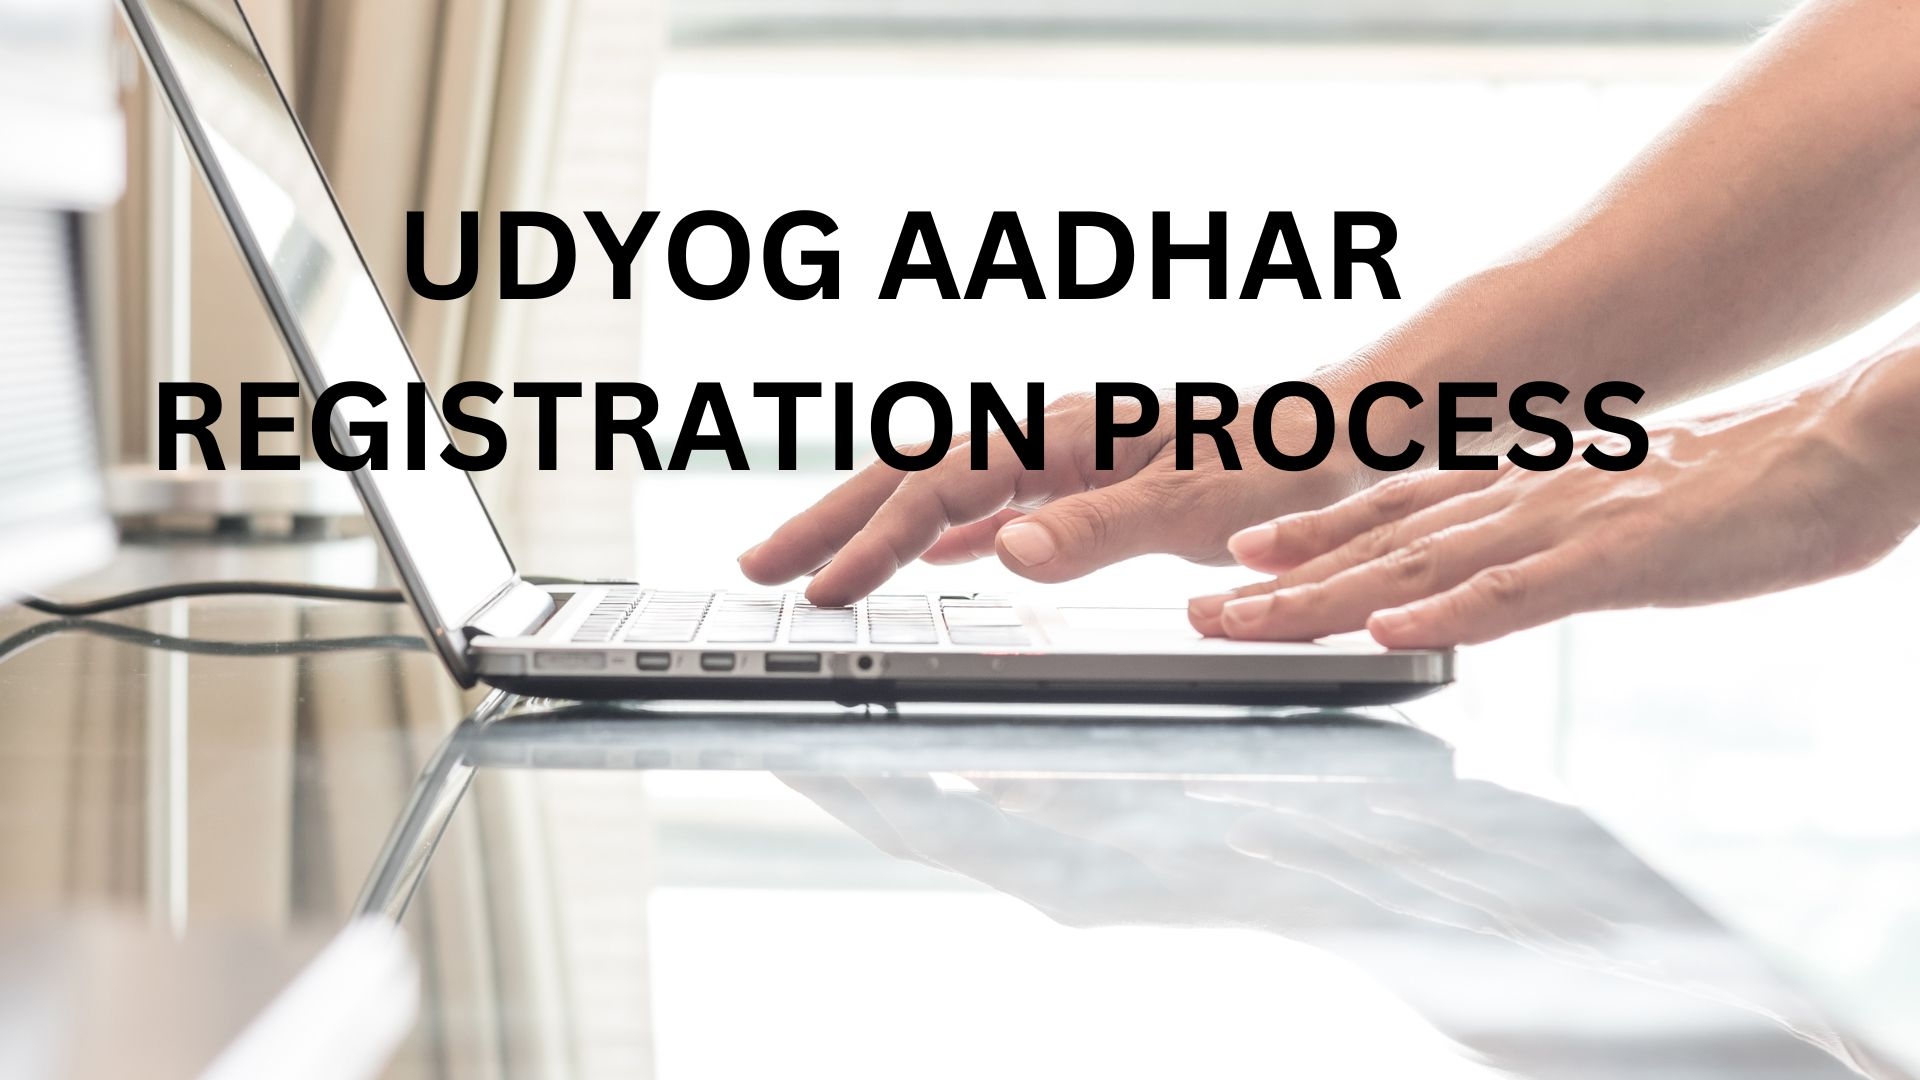 UDYOG AADHAR REGISTRATION PROCESS